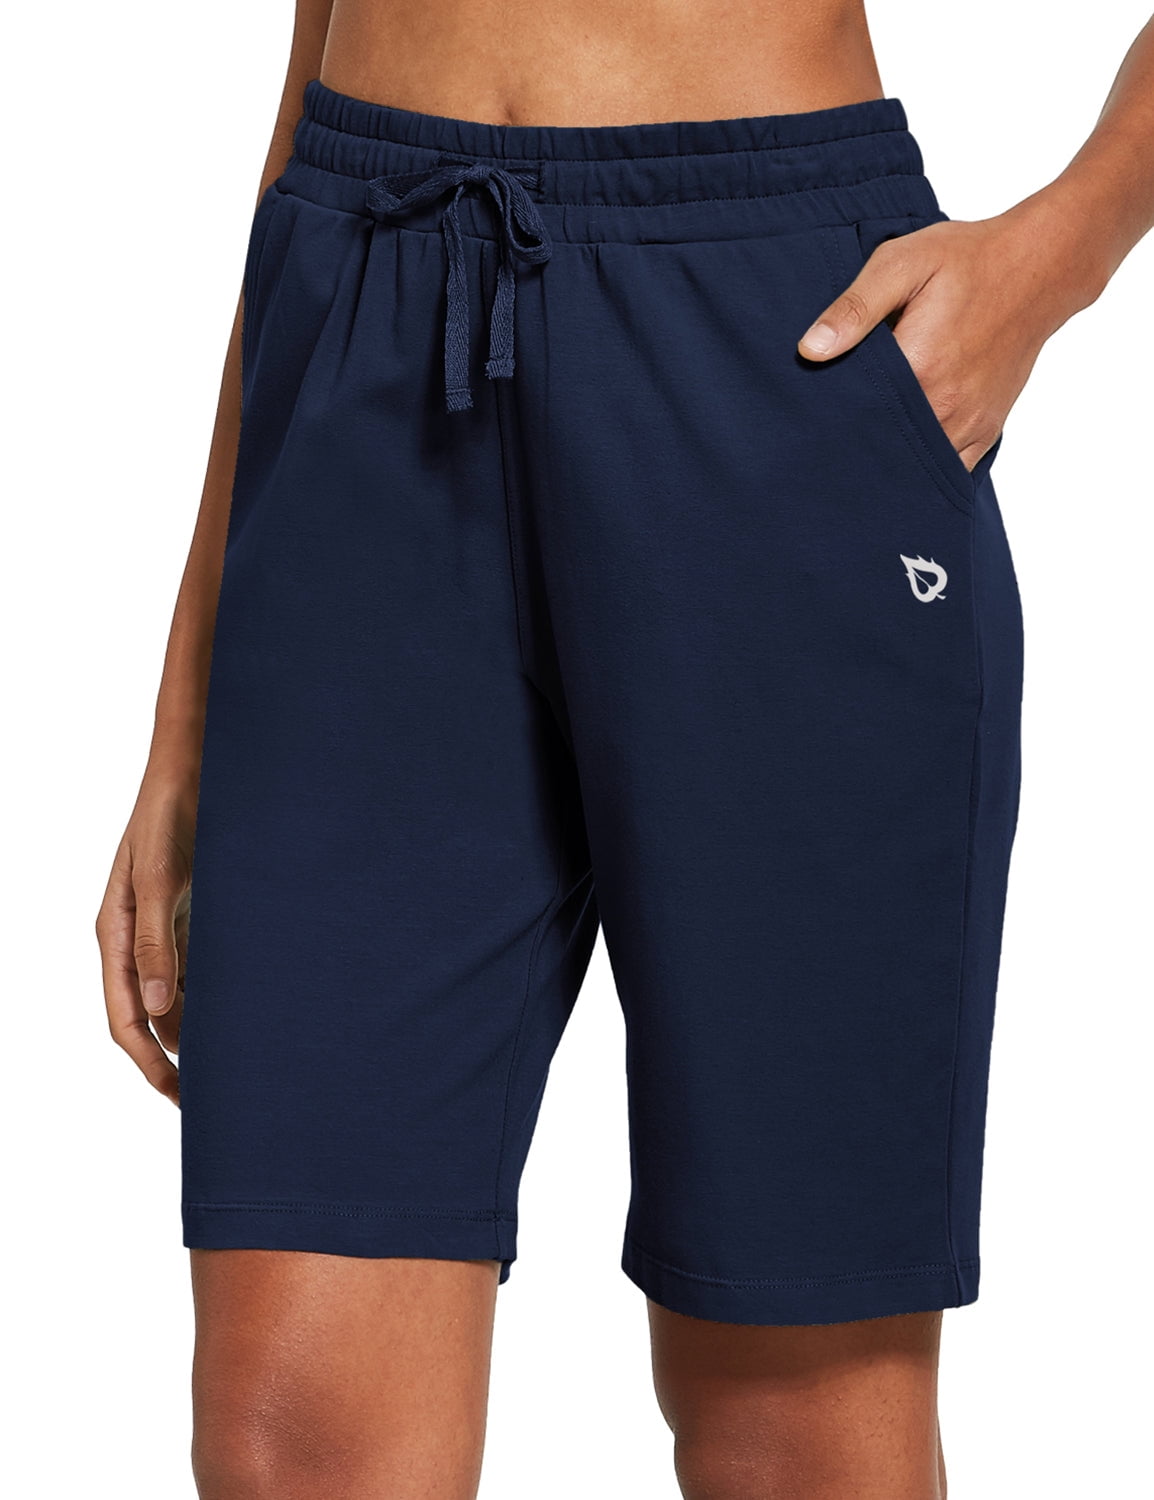 BALEAF Mens 12 Long Cotton Shorts with Pockets Yoga Workout Pajama Lounge Sweat Jersey Shorts 